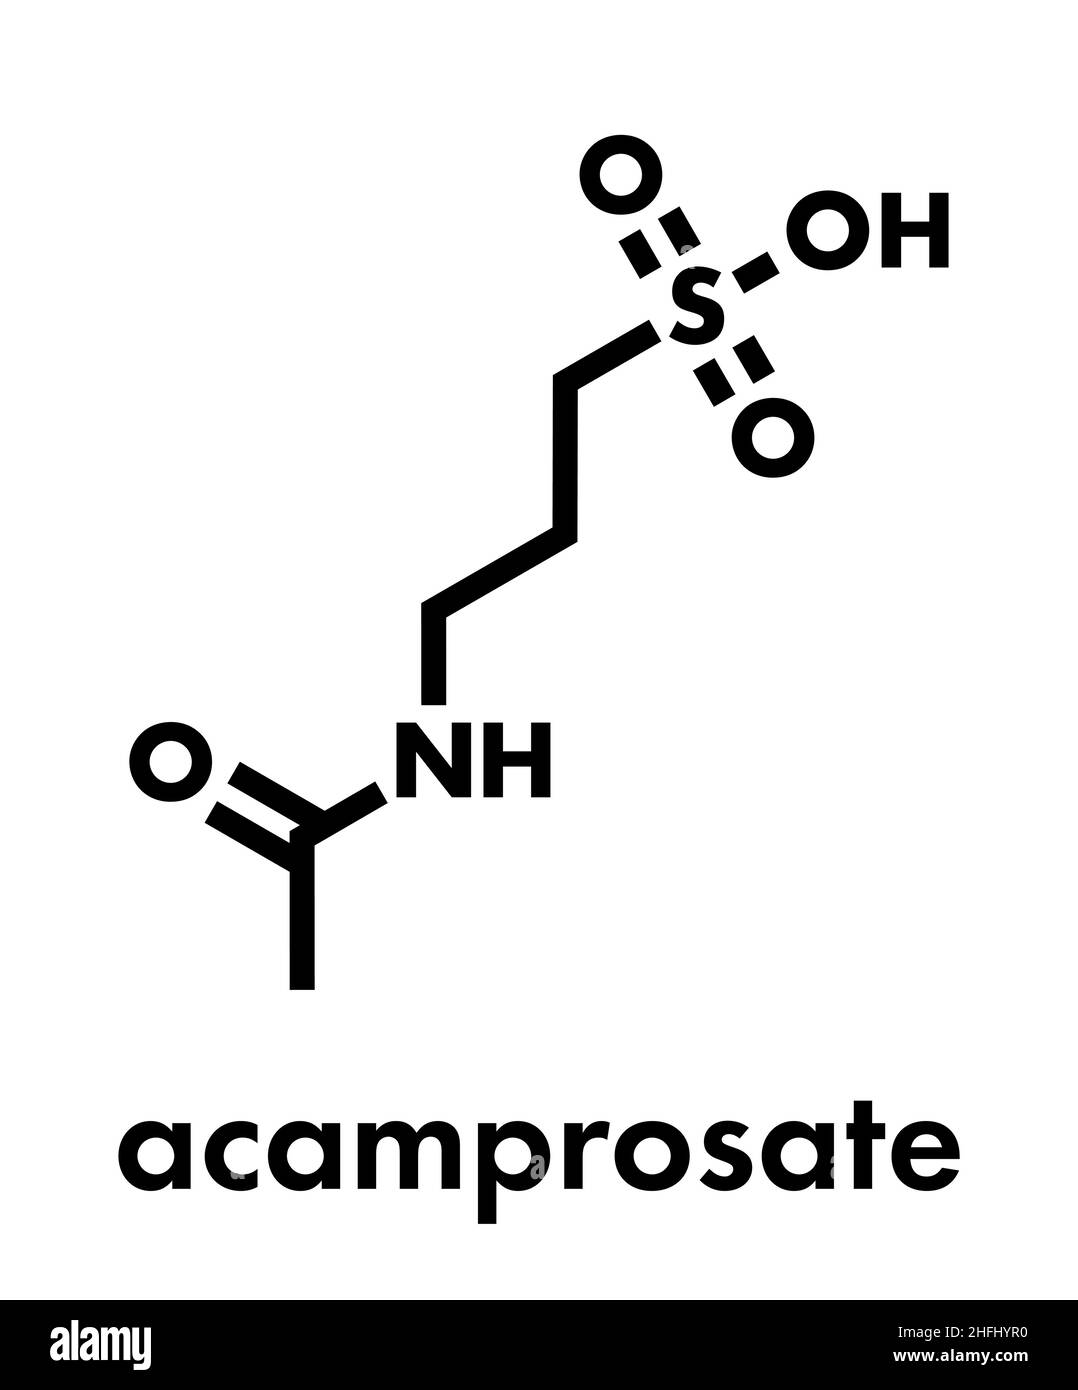 Acamprosate alcoholism treatment drug molecule. Skeletal formula. Stock Vector